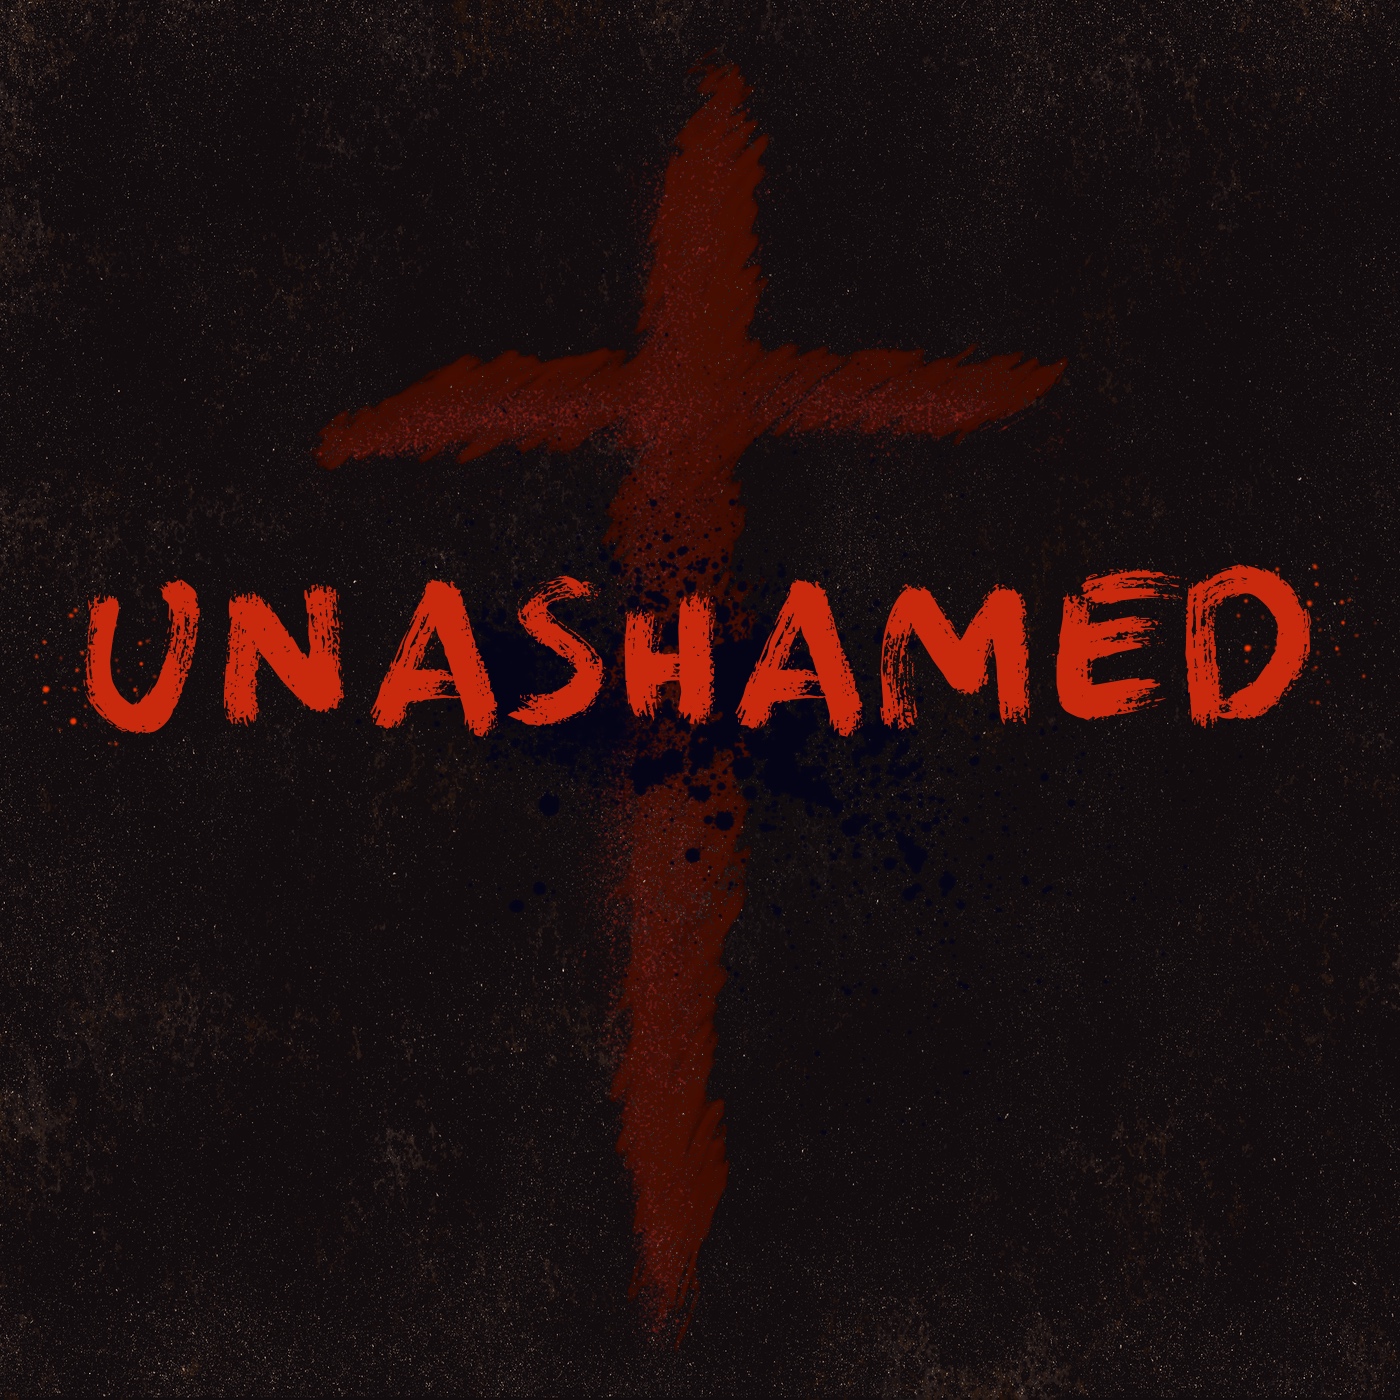 UNASHAMED // 3. Unashamed in Our Workplace